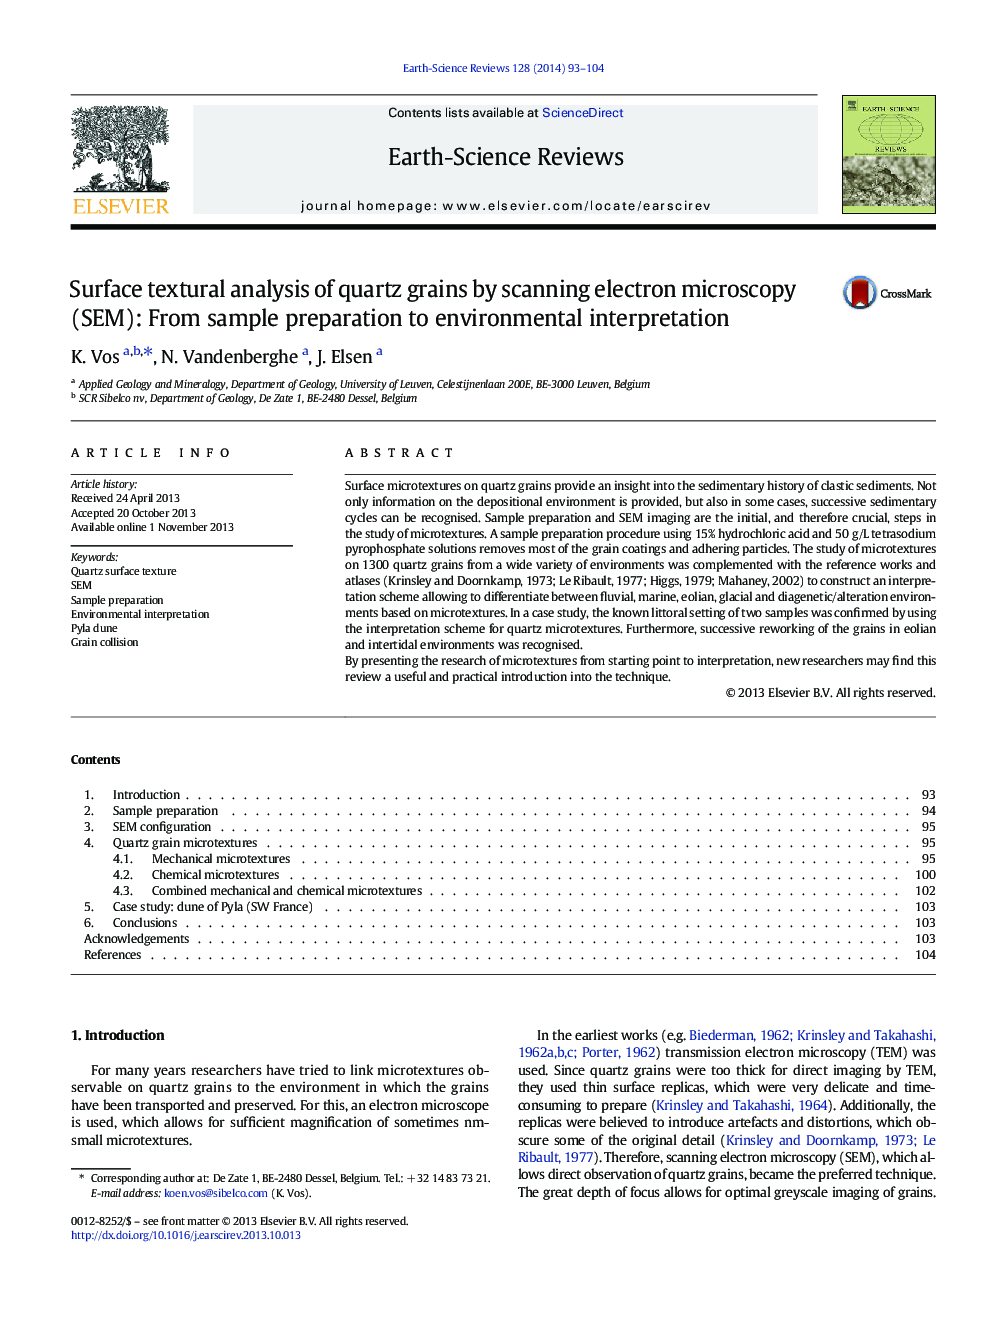 Surface textural analysis of quartz grains by scanning electron microscopy (SEM): From sample preparation to environmental interpretation